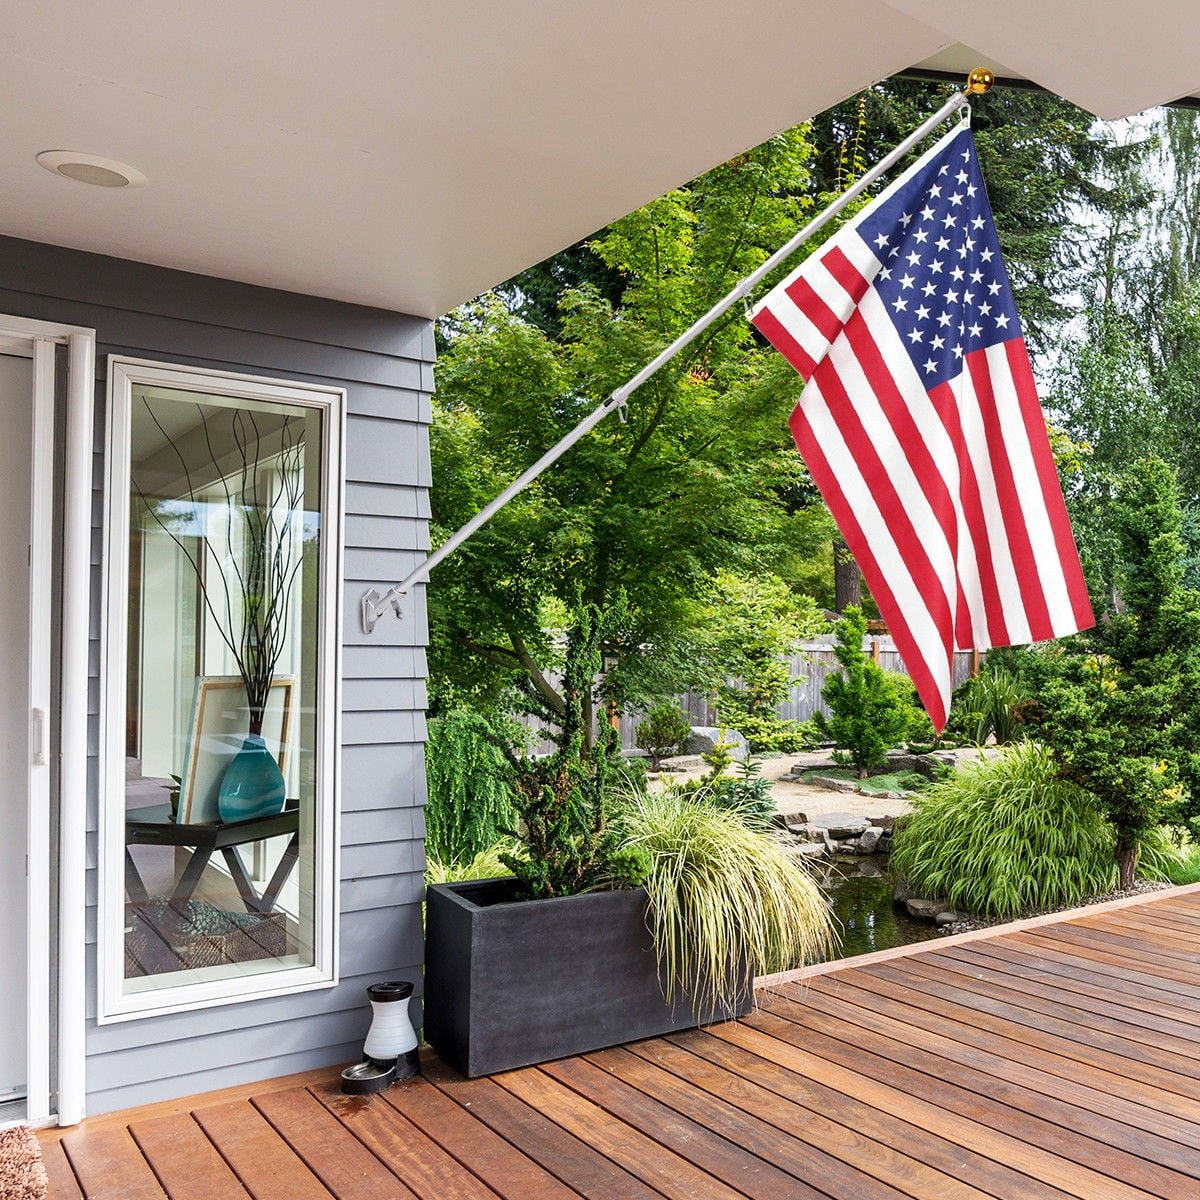 5' Wood Flag Pole Kit Wall Bracket With 3x5 USA 35 Star Linear Polyester Flag 